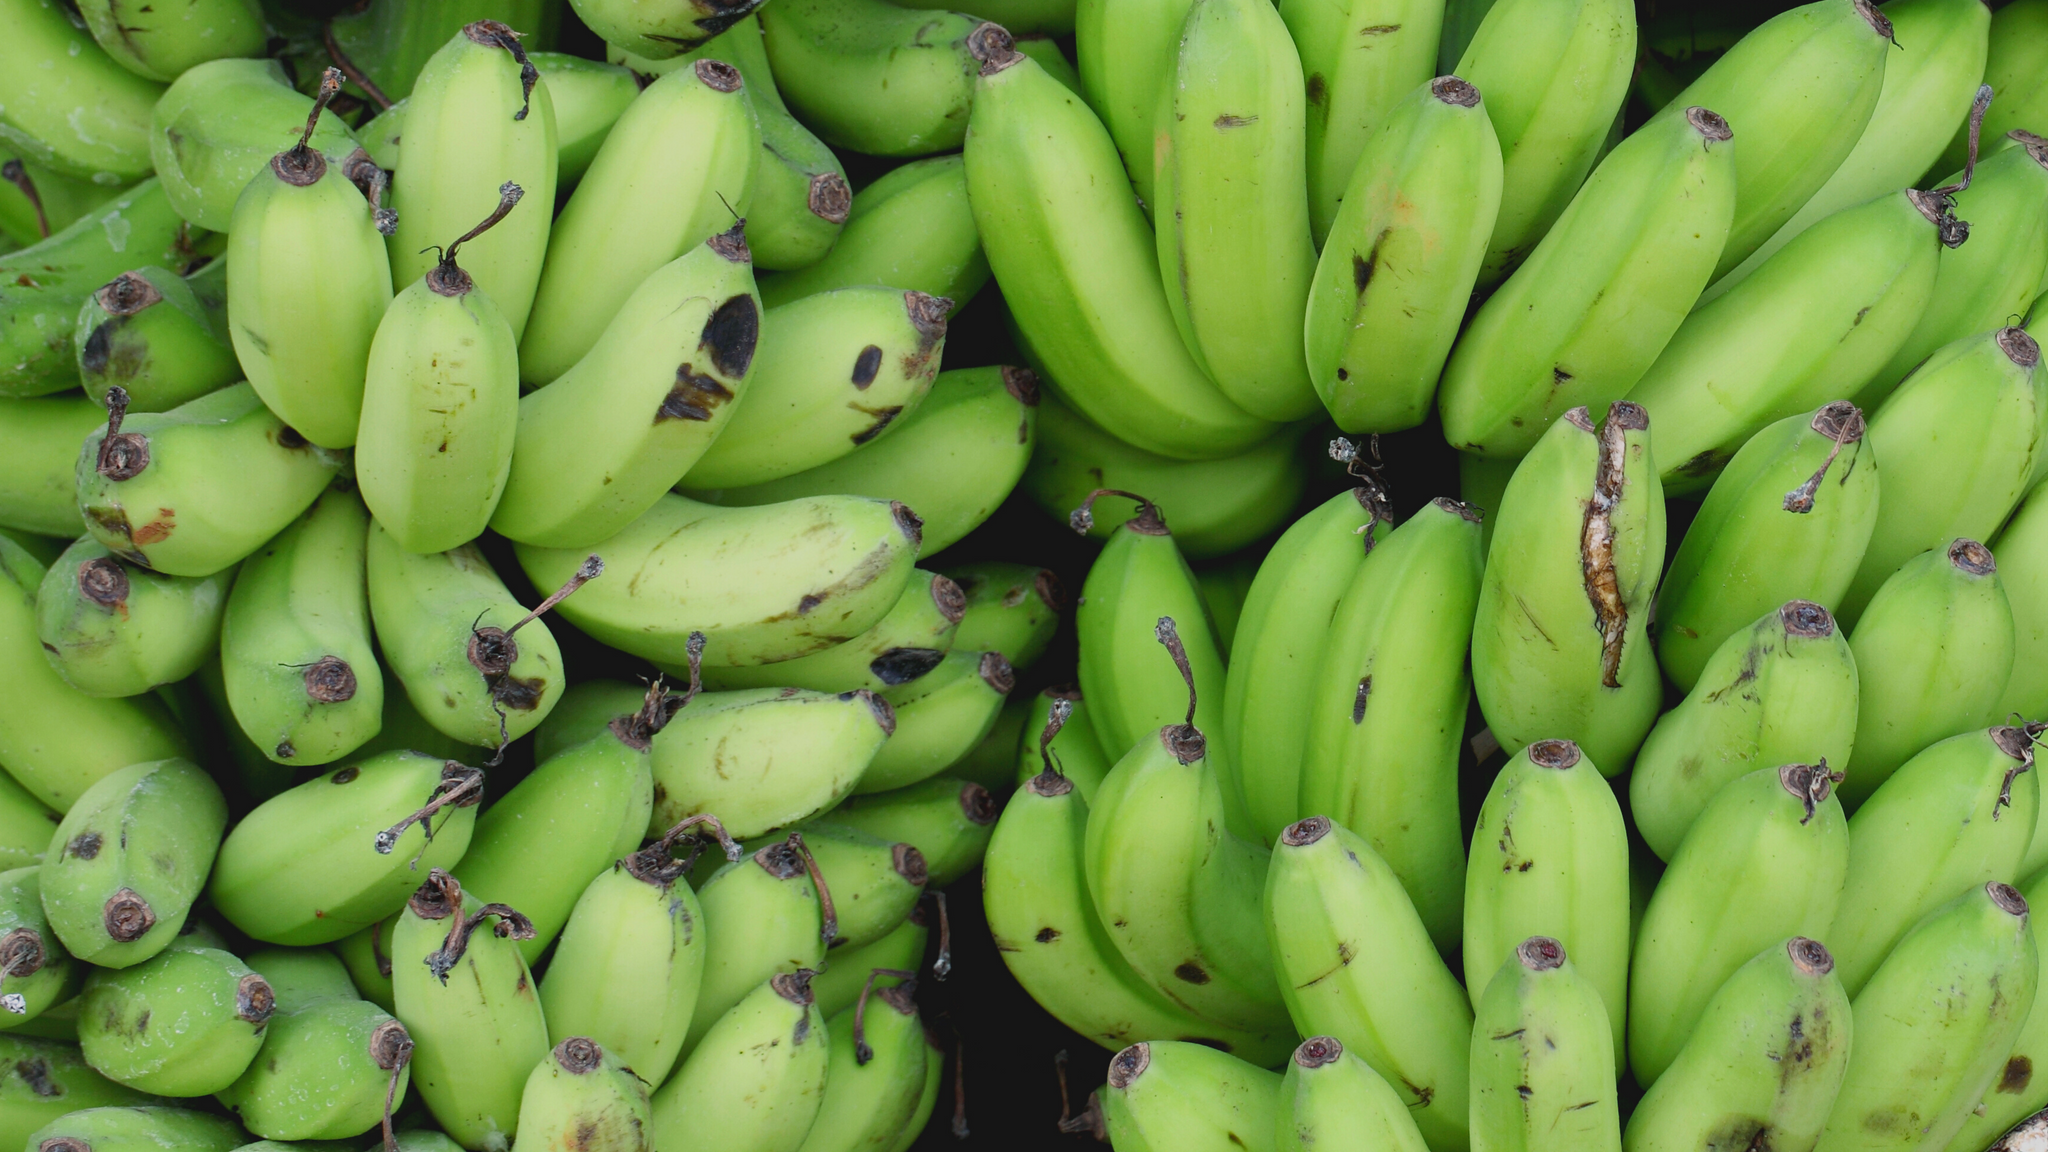 benefits of green banana